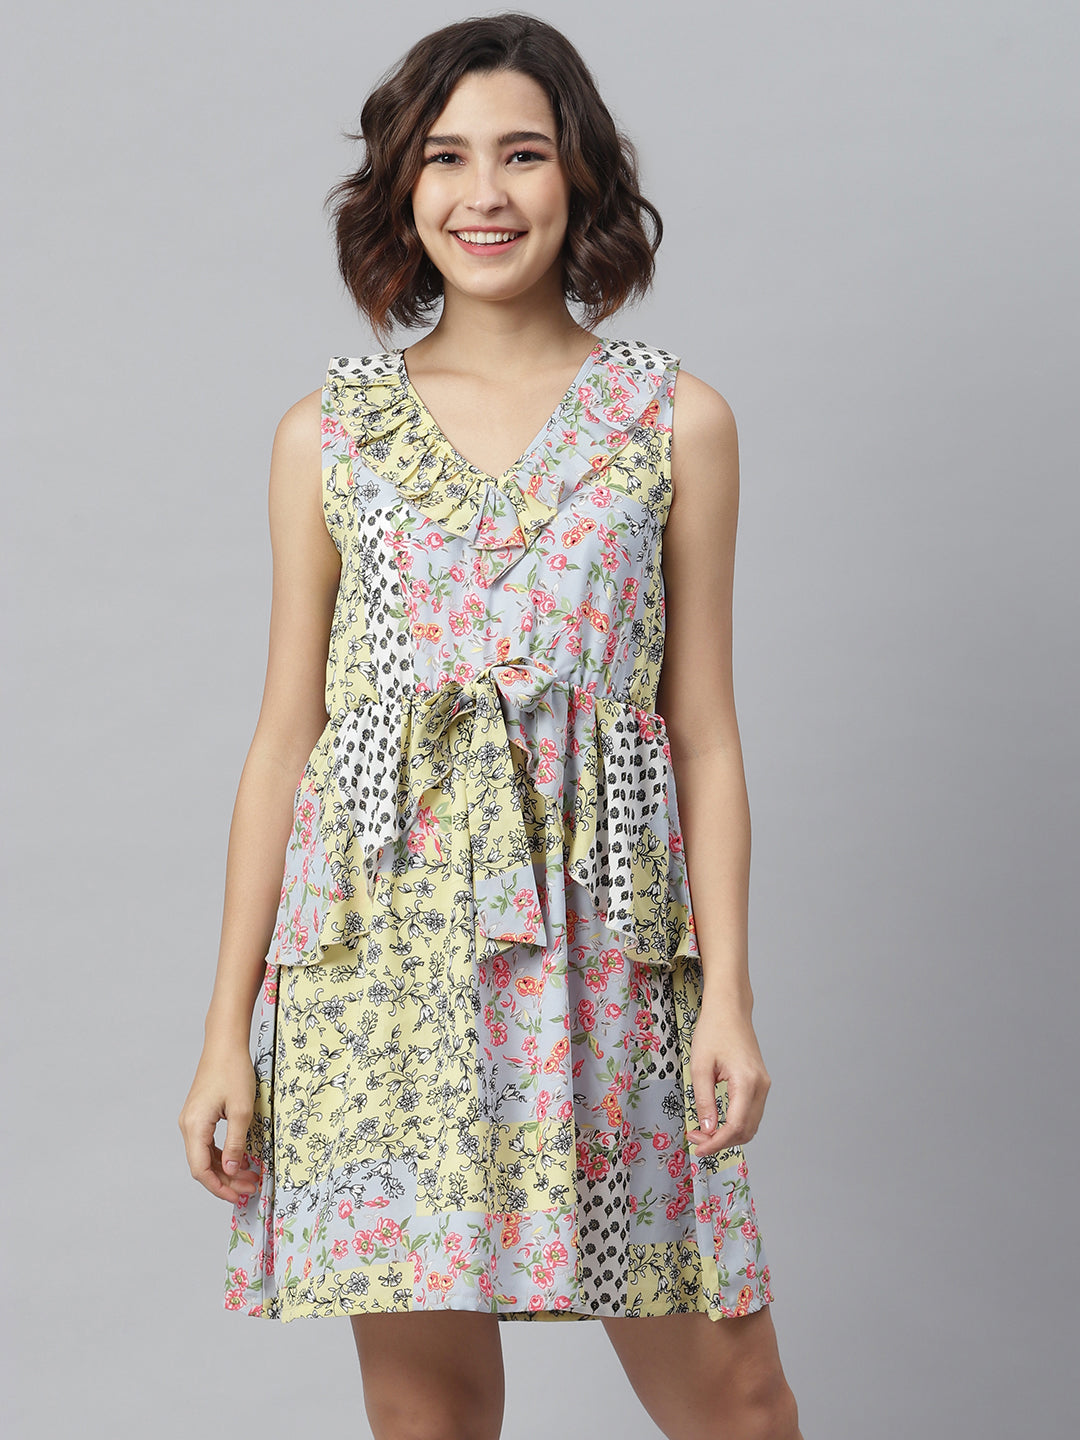 Women's Tile Print Dress with Peplum Detail - StyleStone